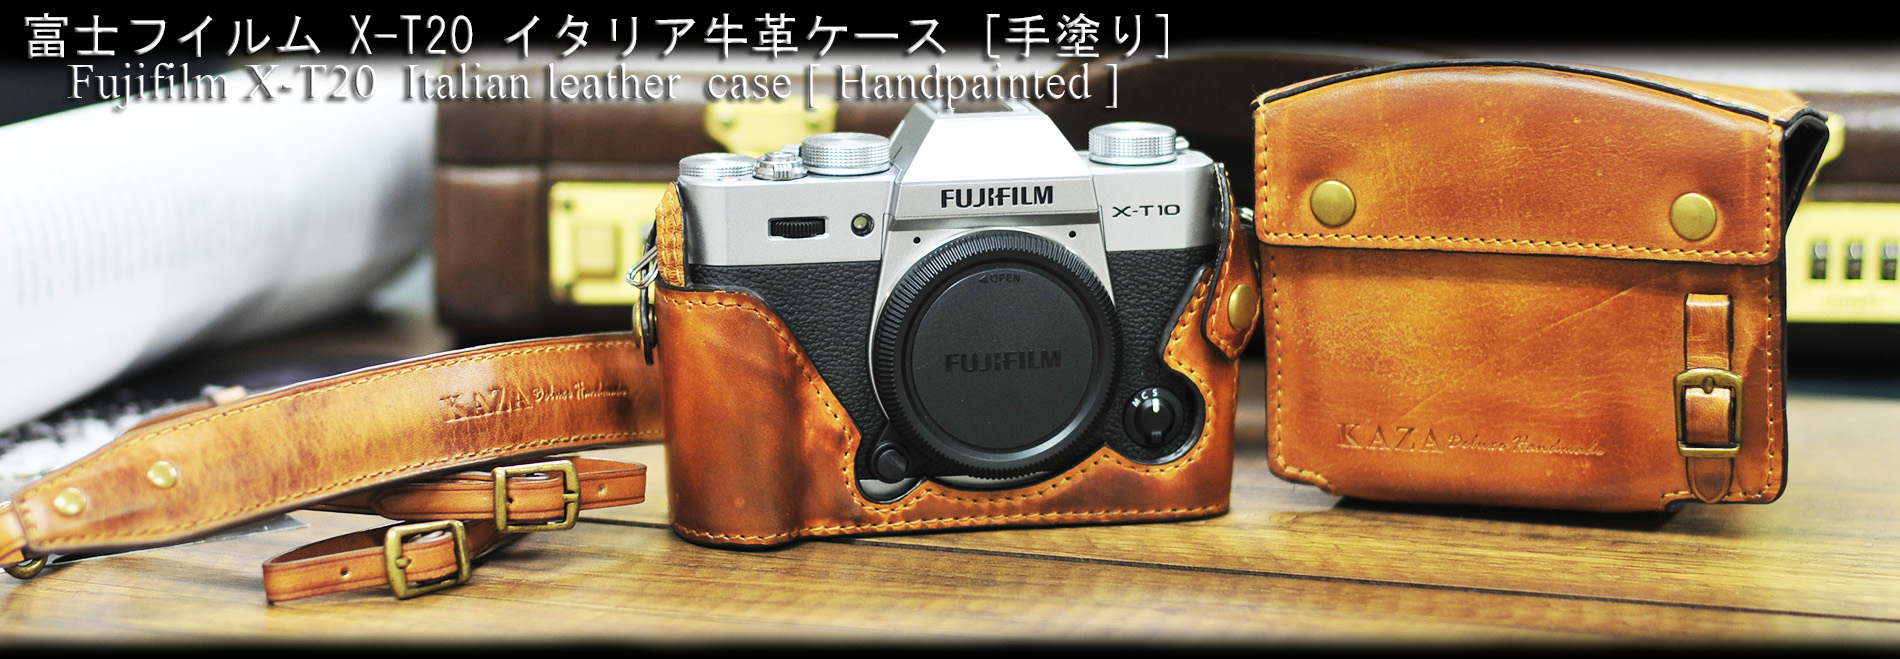 fujifilm xt20 camera case